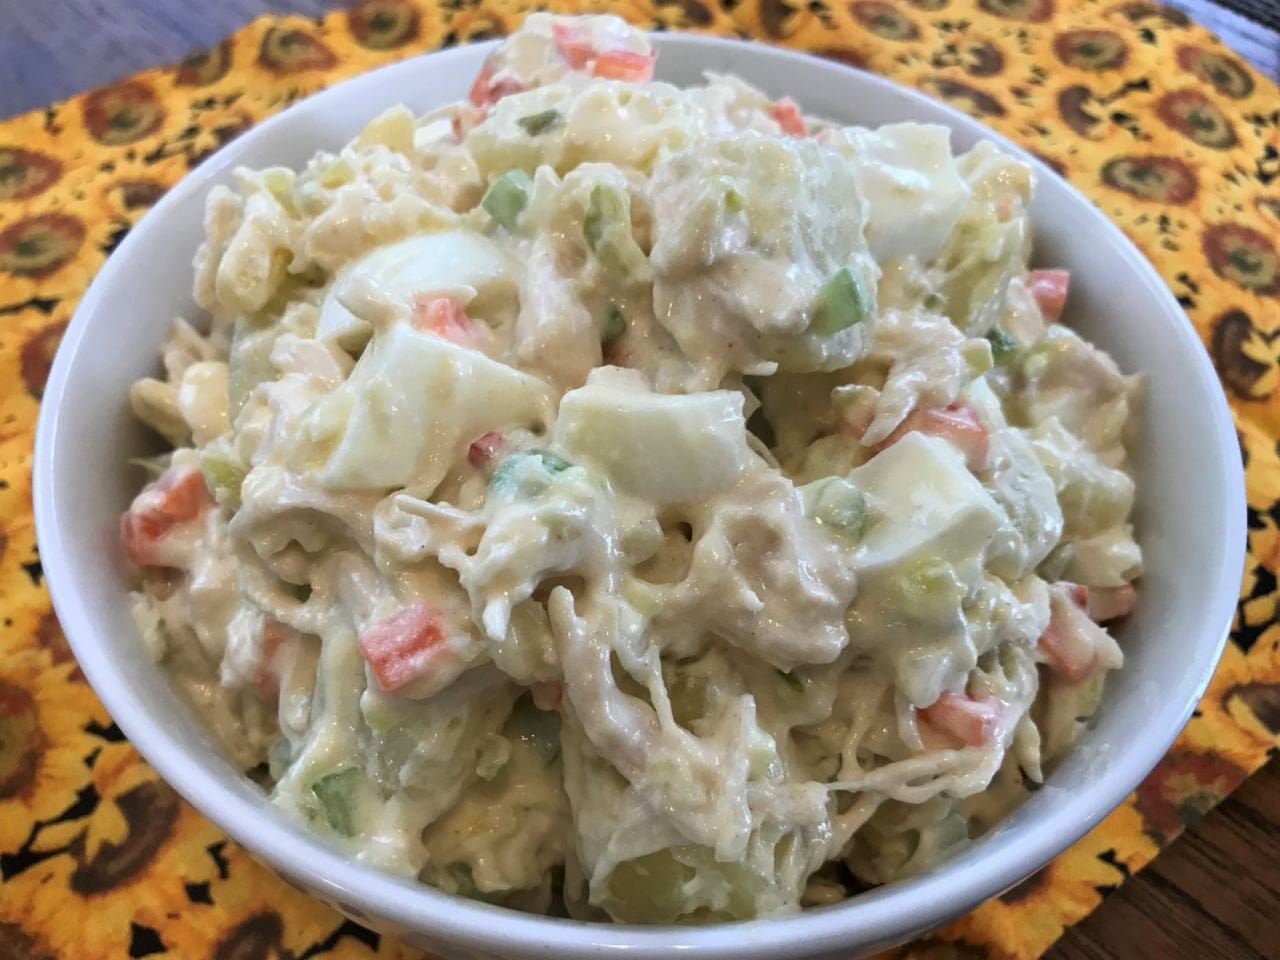 Chicken Potato Salad